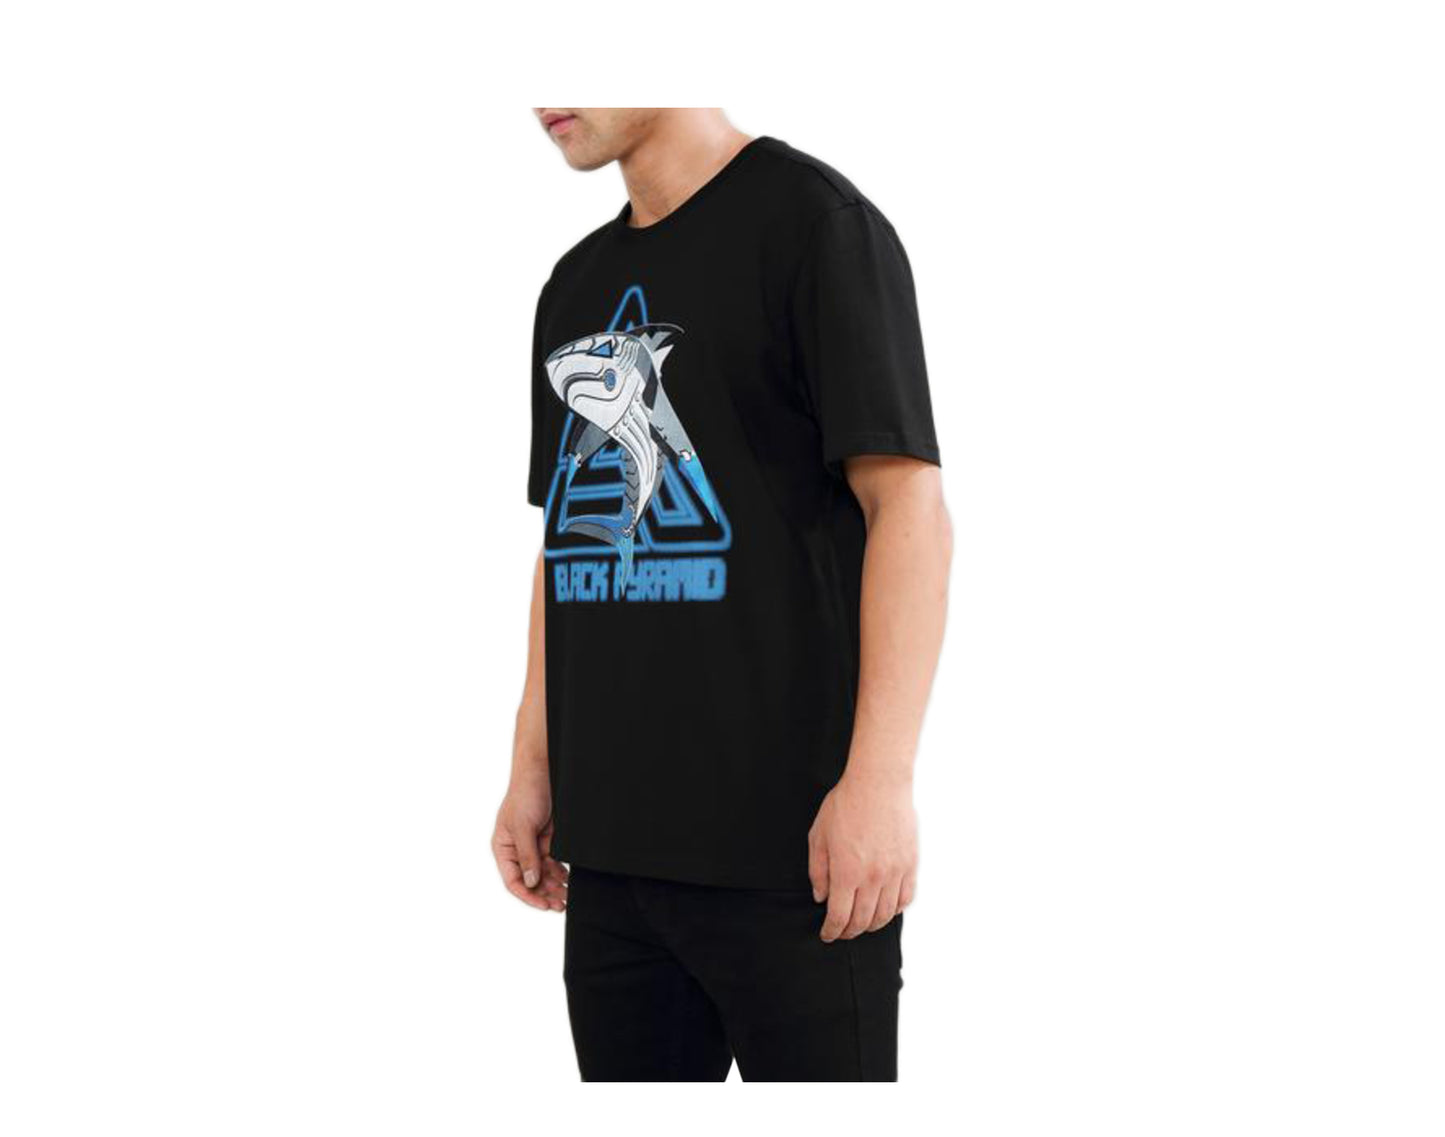 Black Pyramid Cyber Shark Black/Blue Men's T-Shirt Y1162164-BLK